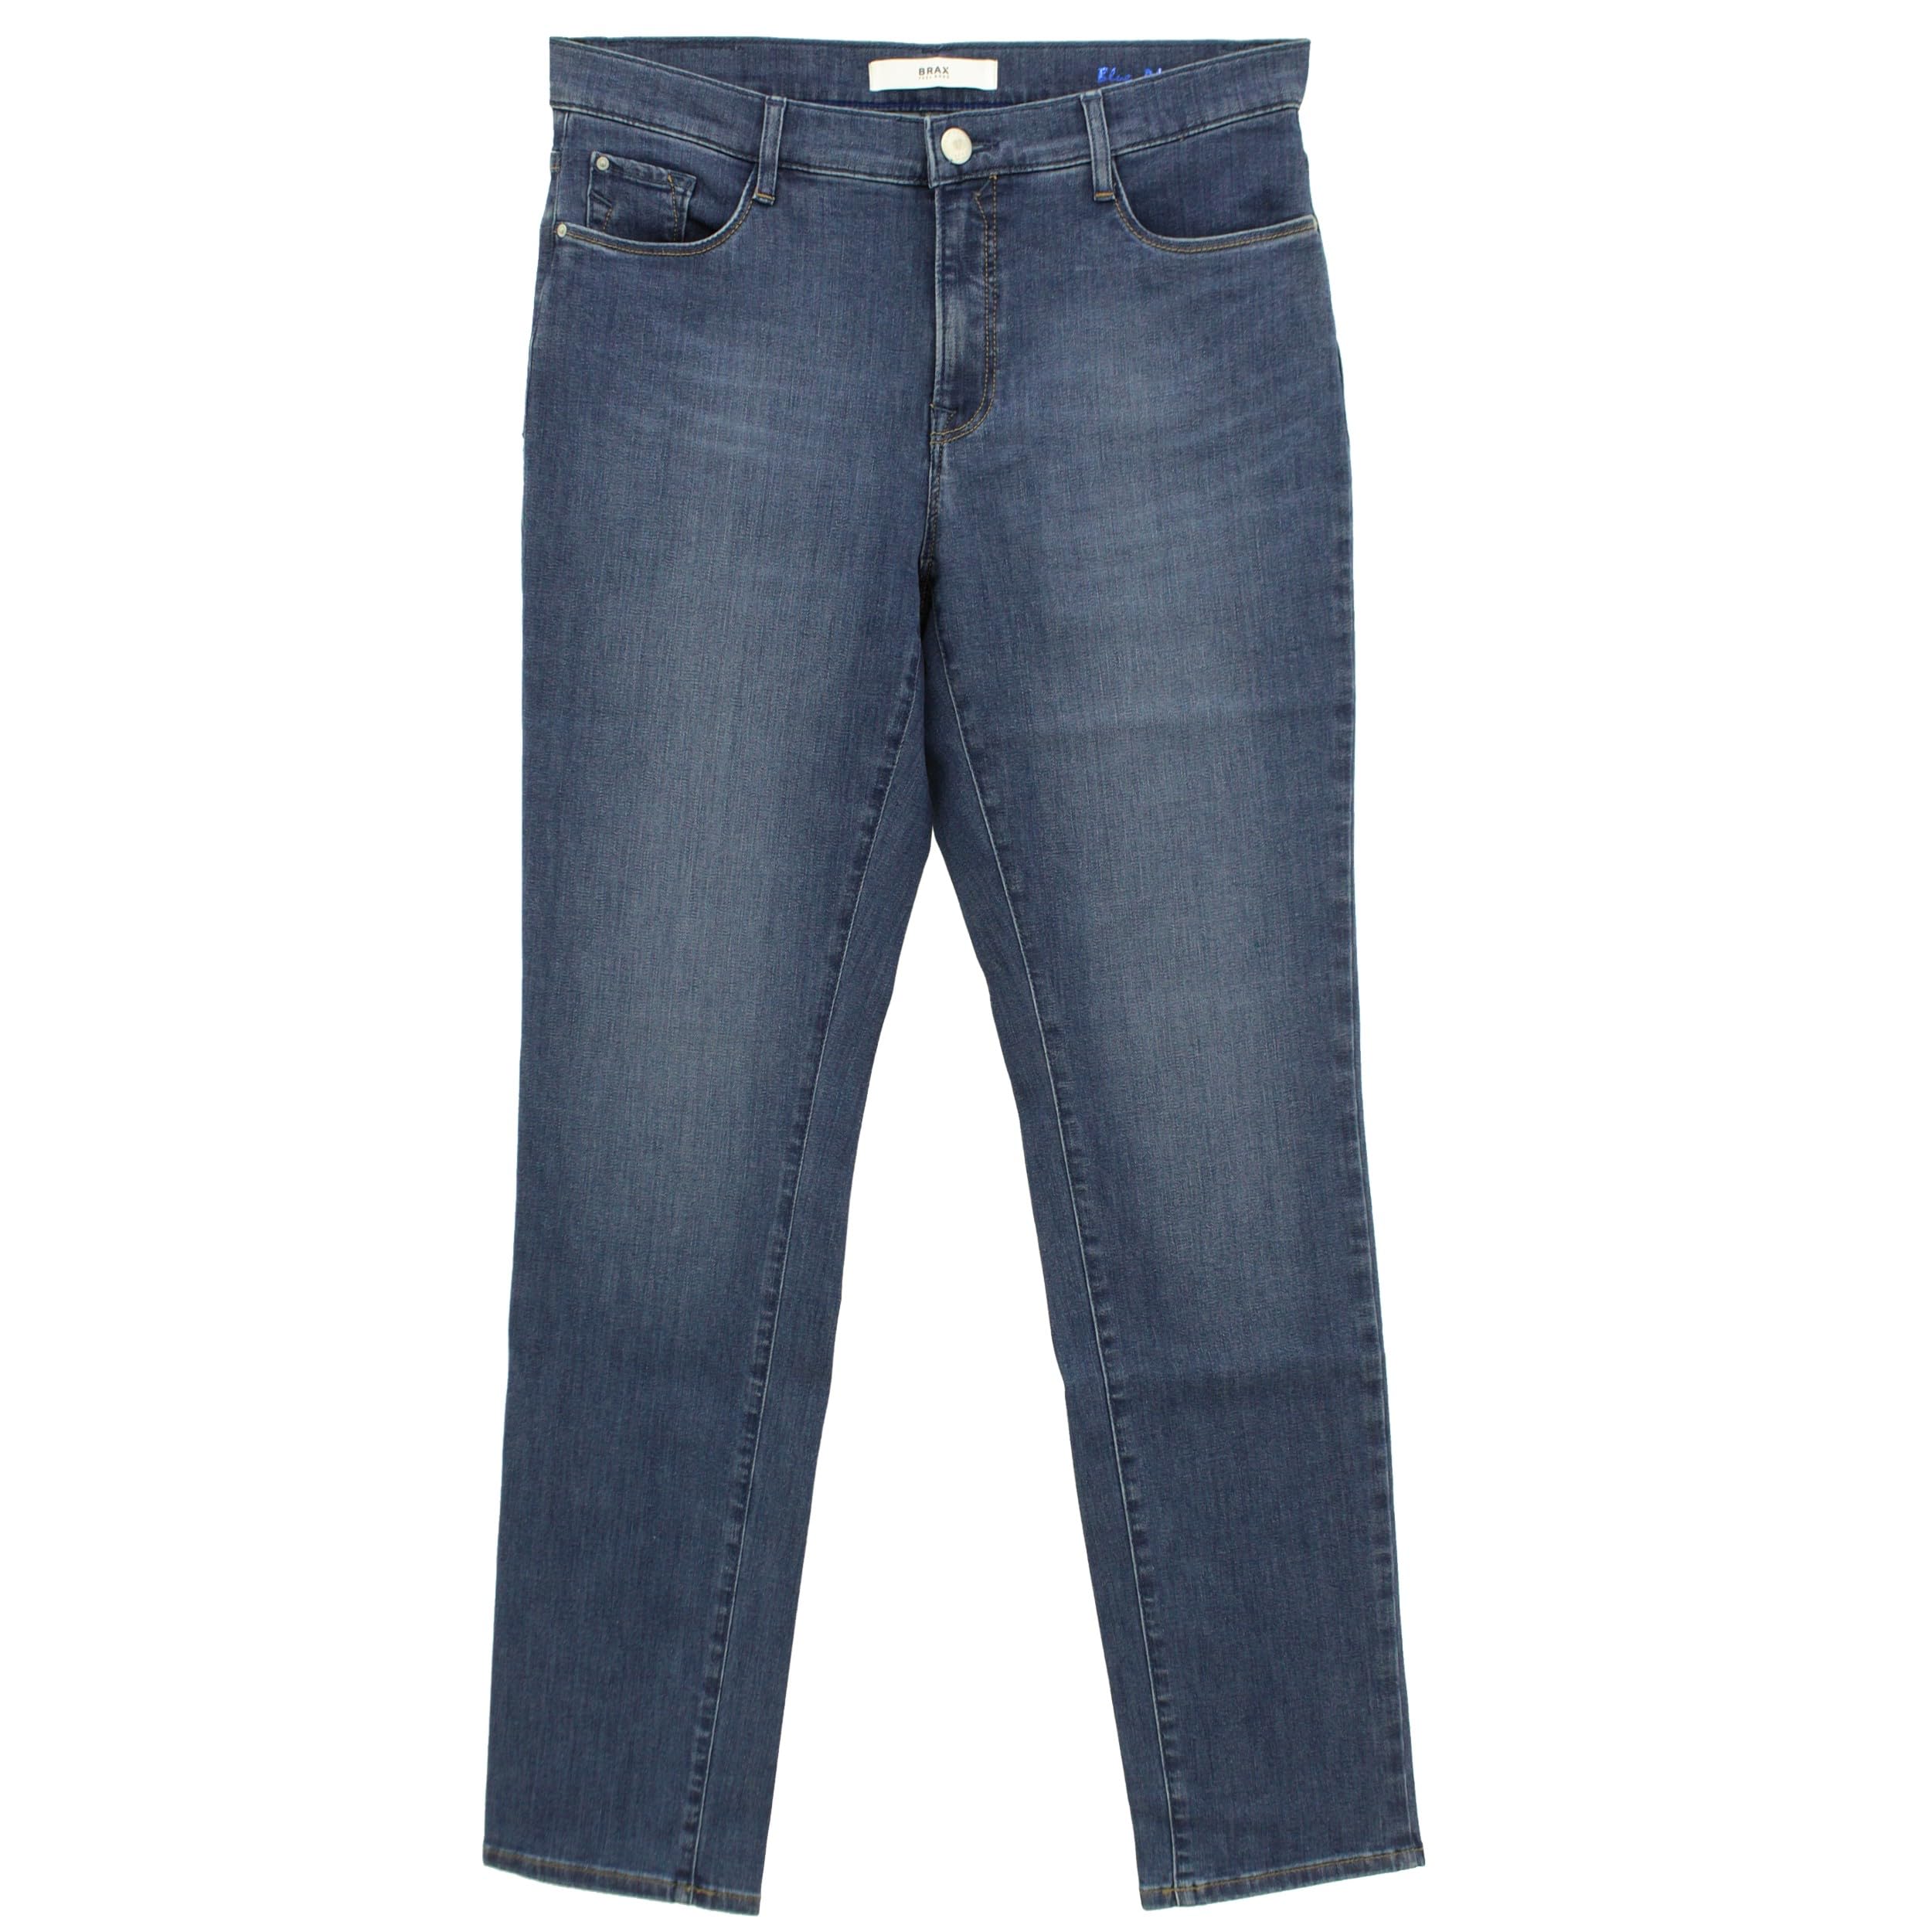 BRAX Damen Style Mary Blue Planet Slim Jeans, USED LIGHT BLUE, 26W / 32L (Herstellergröße: 34)